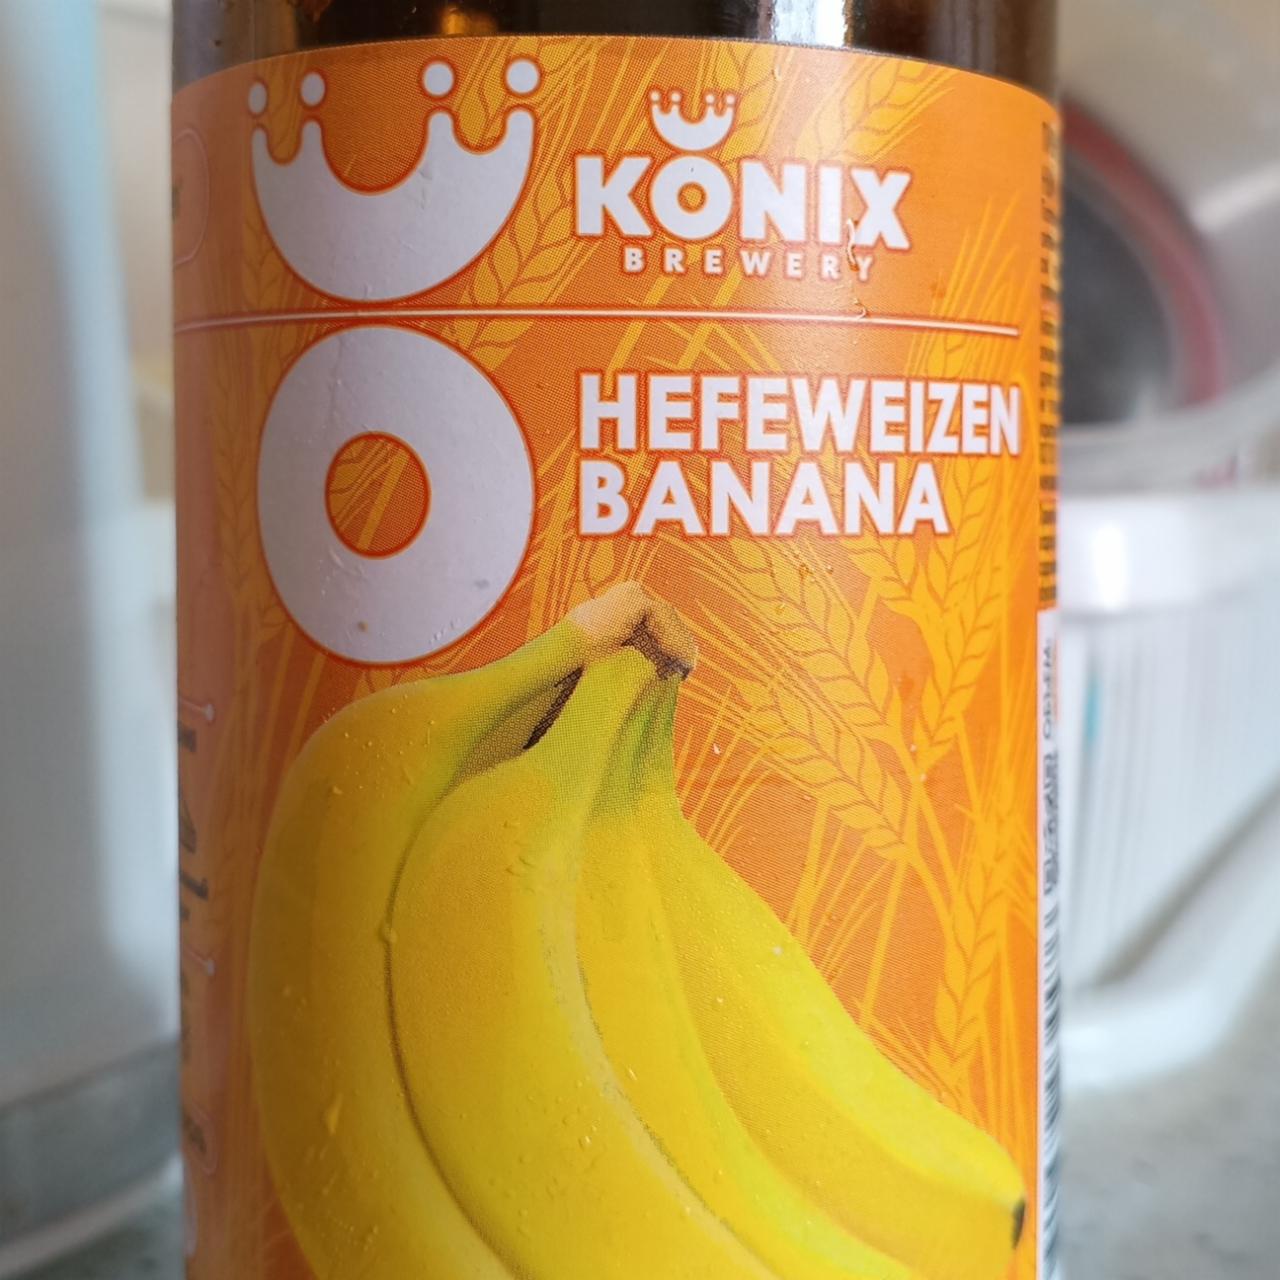 Фото - Пиво банановое Hefeweizen Banana Könix Brewery